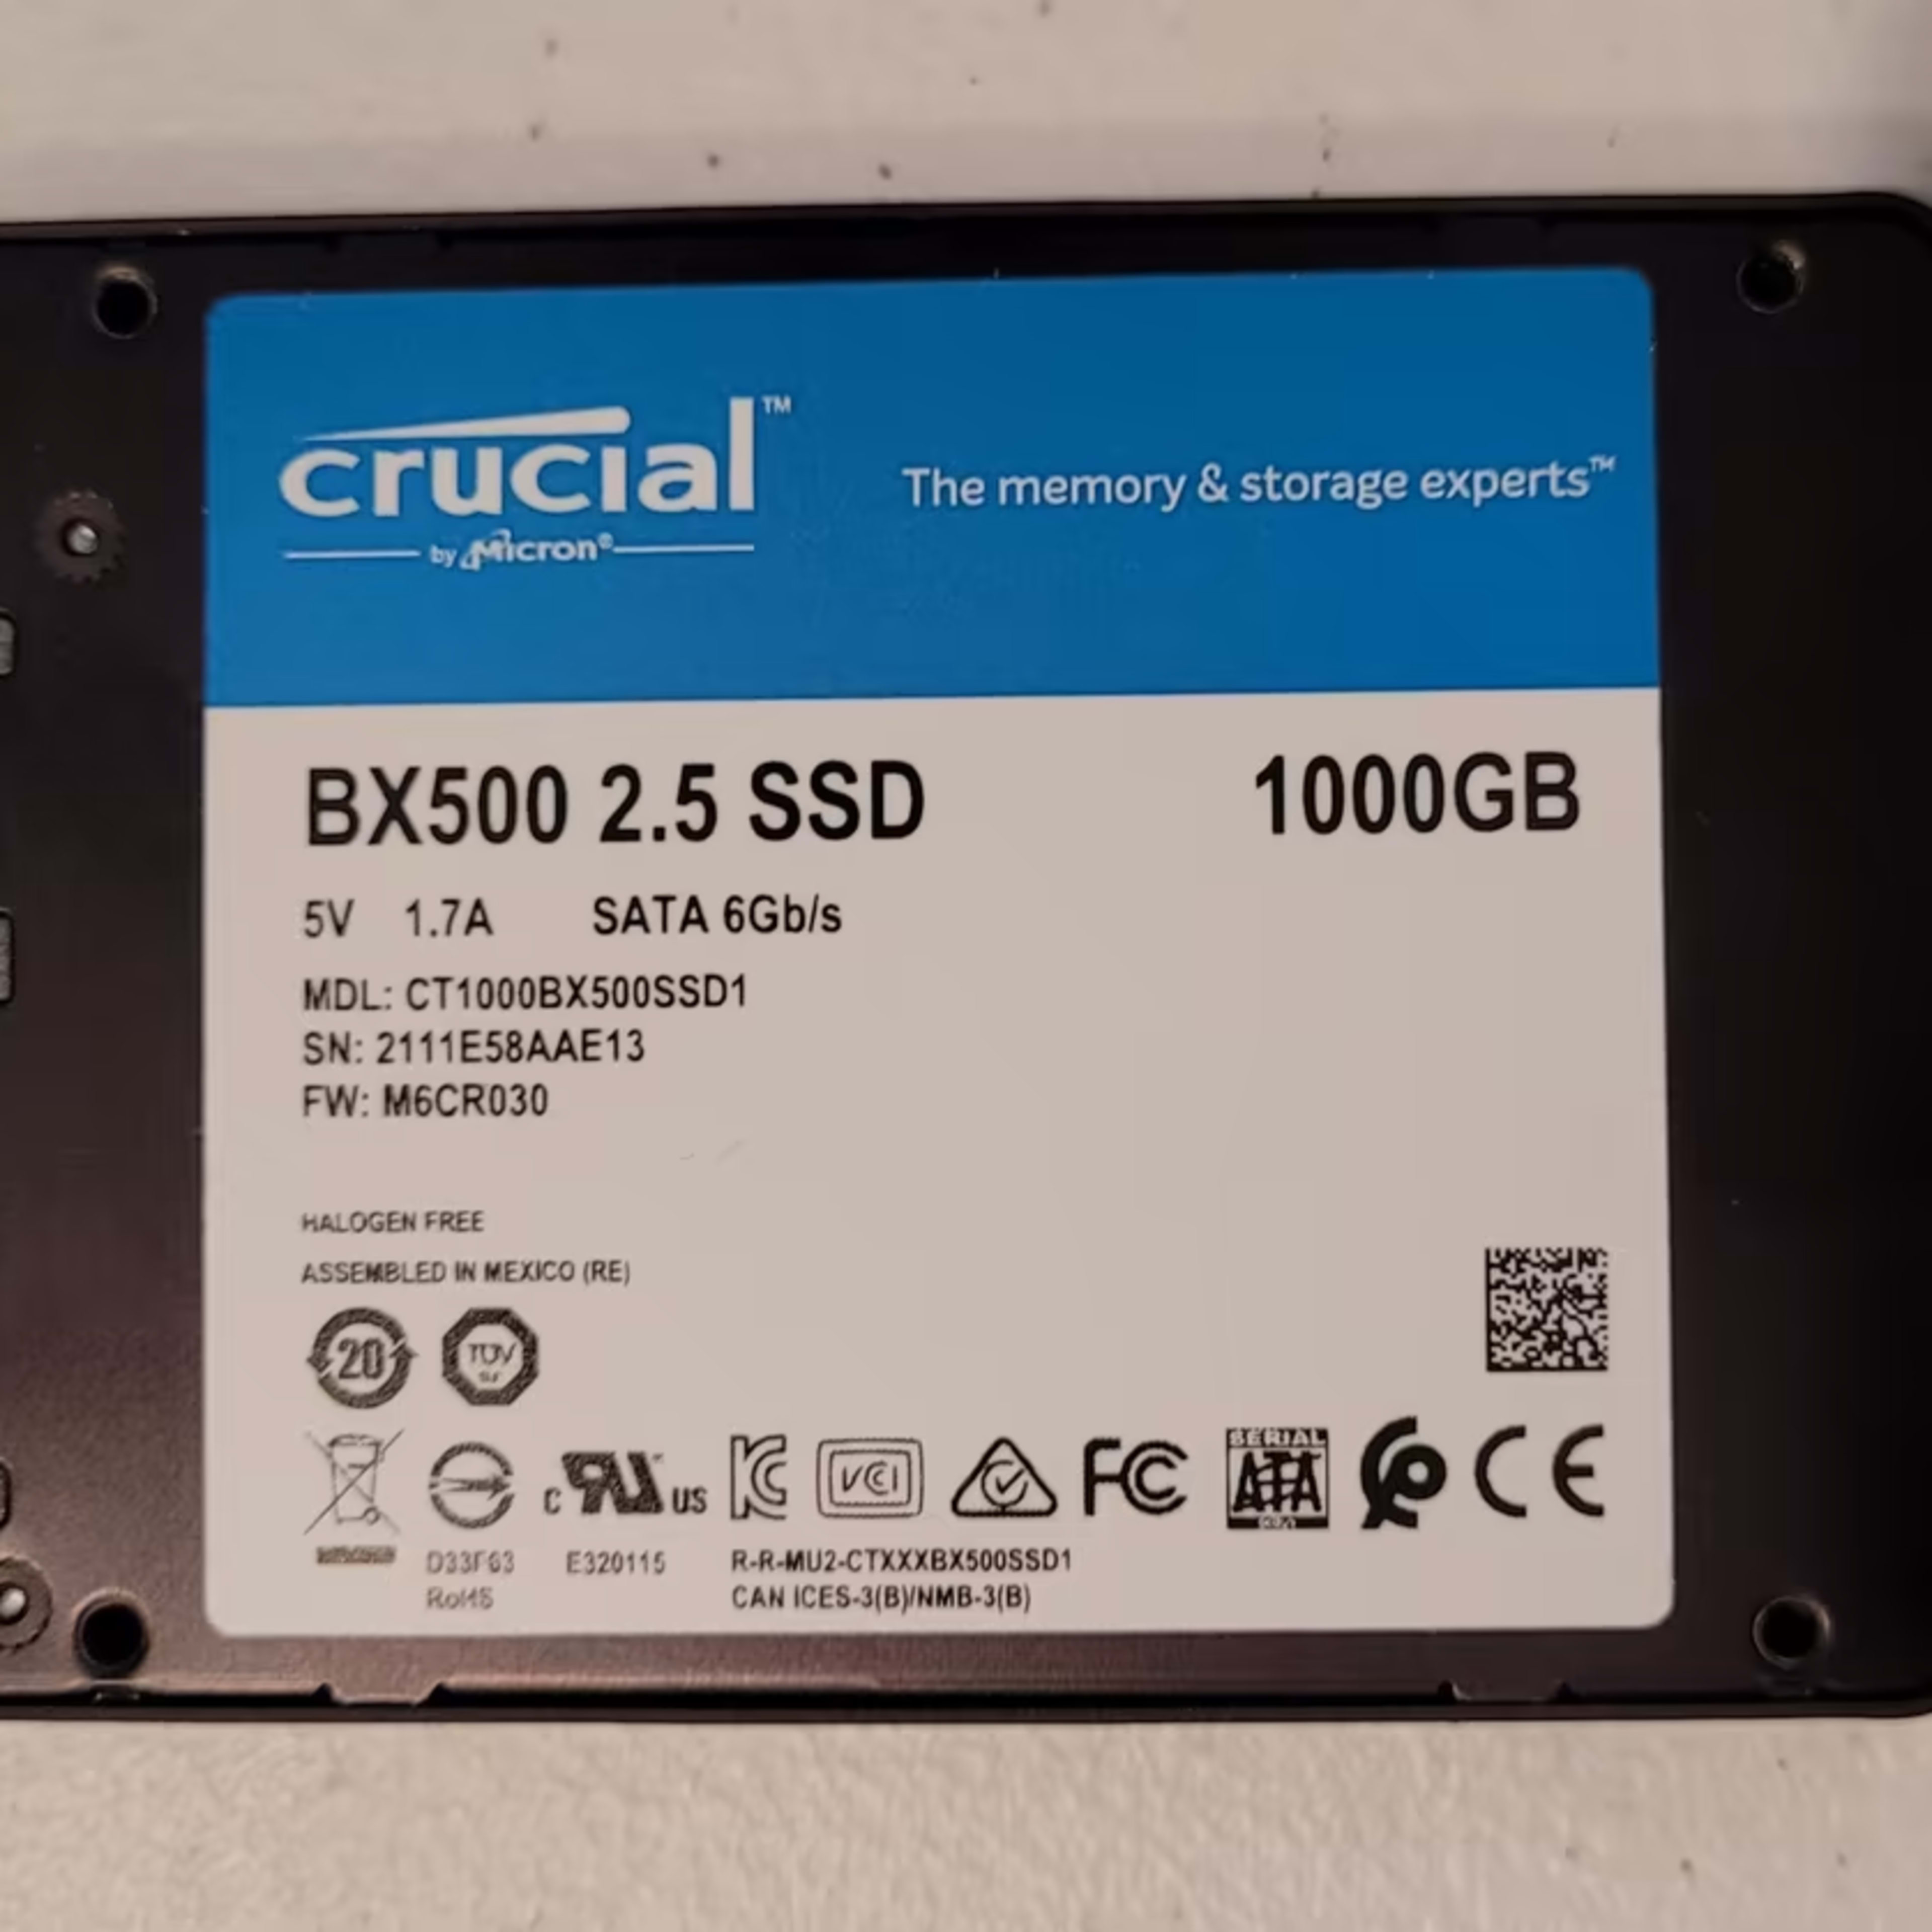 NAND SSD BX500 Jawa Crucial 1TB 2.5-Inch | Internal SATA 3D